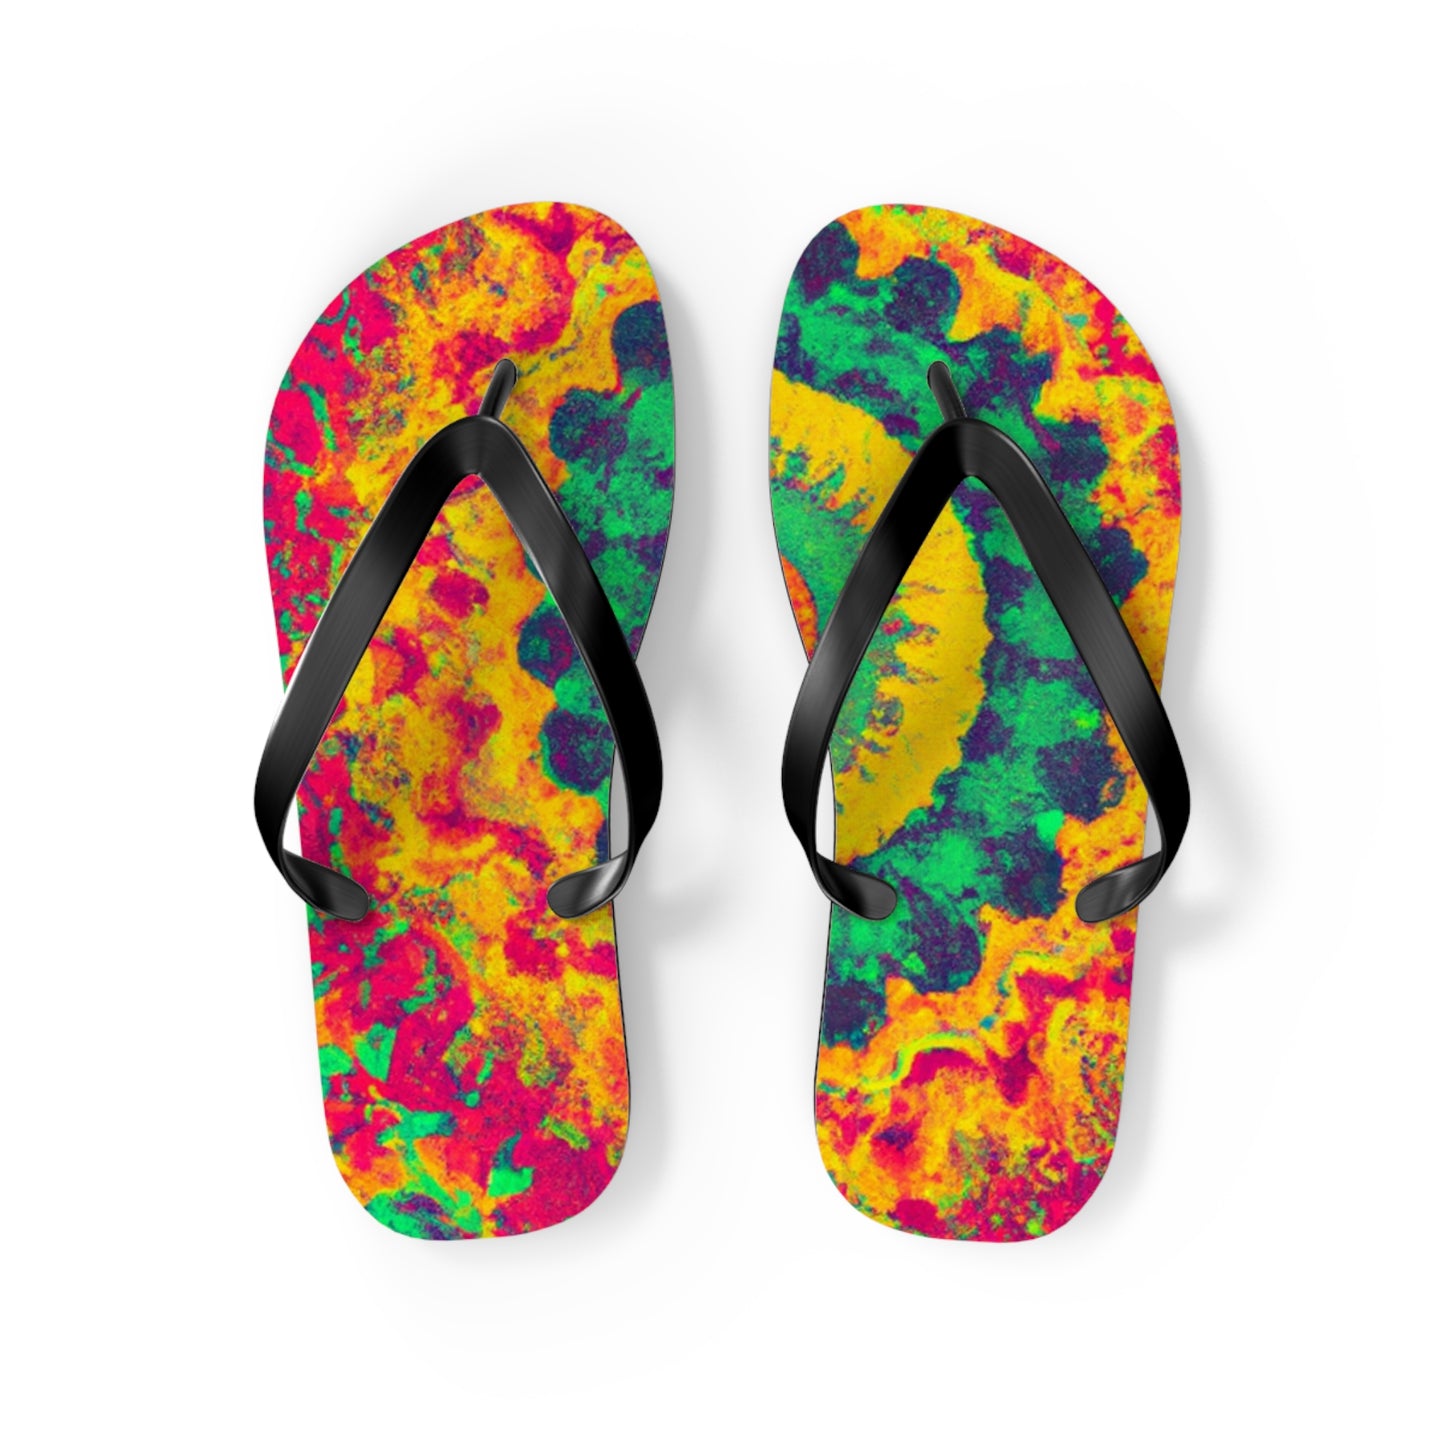 Grandma Hilda's Shoe Emporium - Psychedelic Trippy Flip Flop Beach Sandals